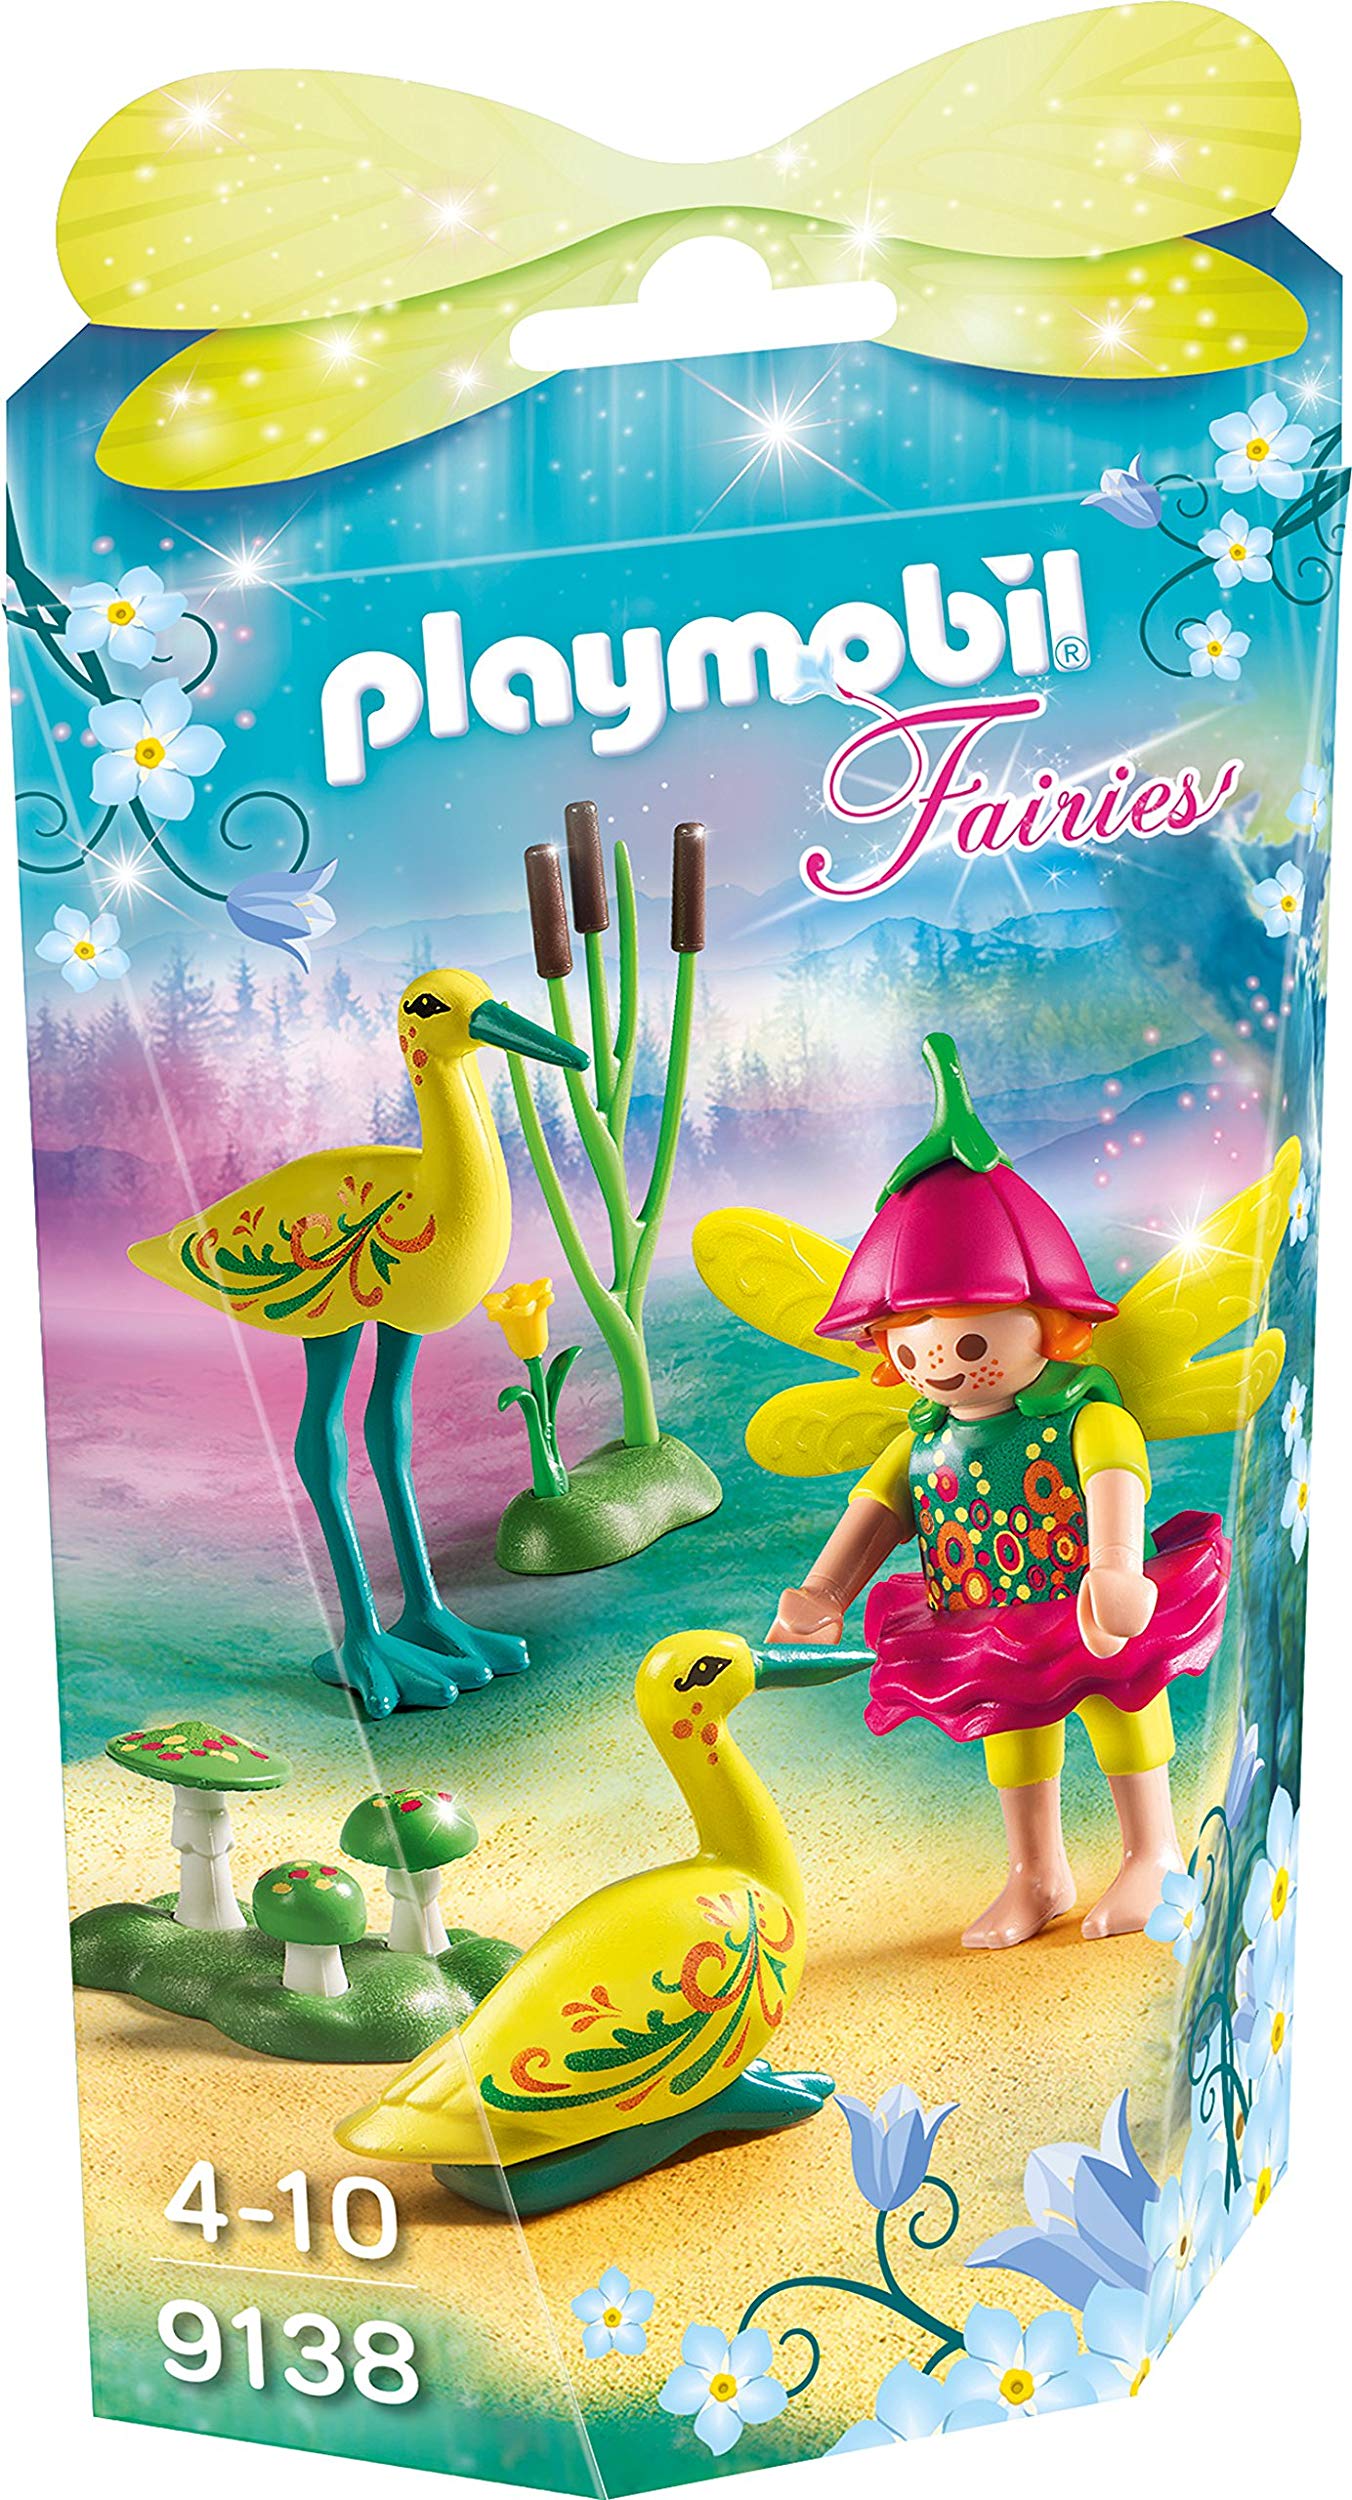 Playmobil Fairy Friends Storks